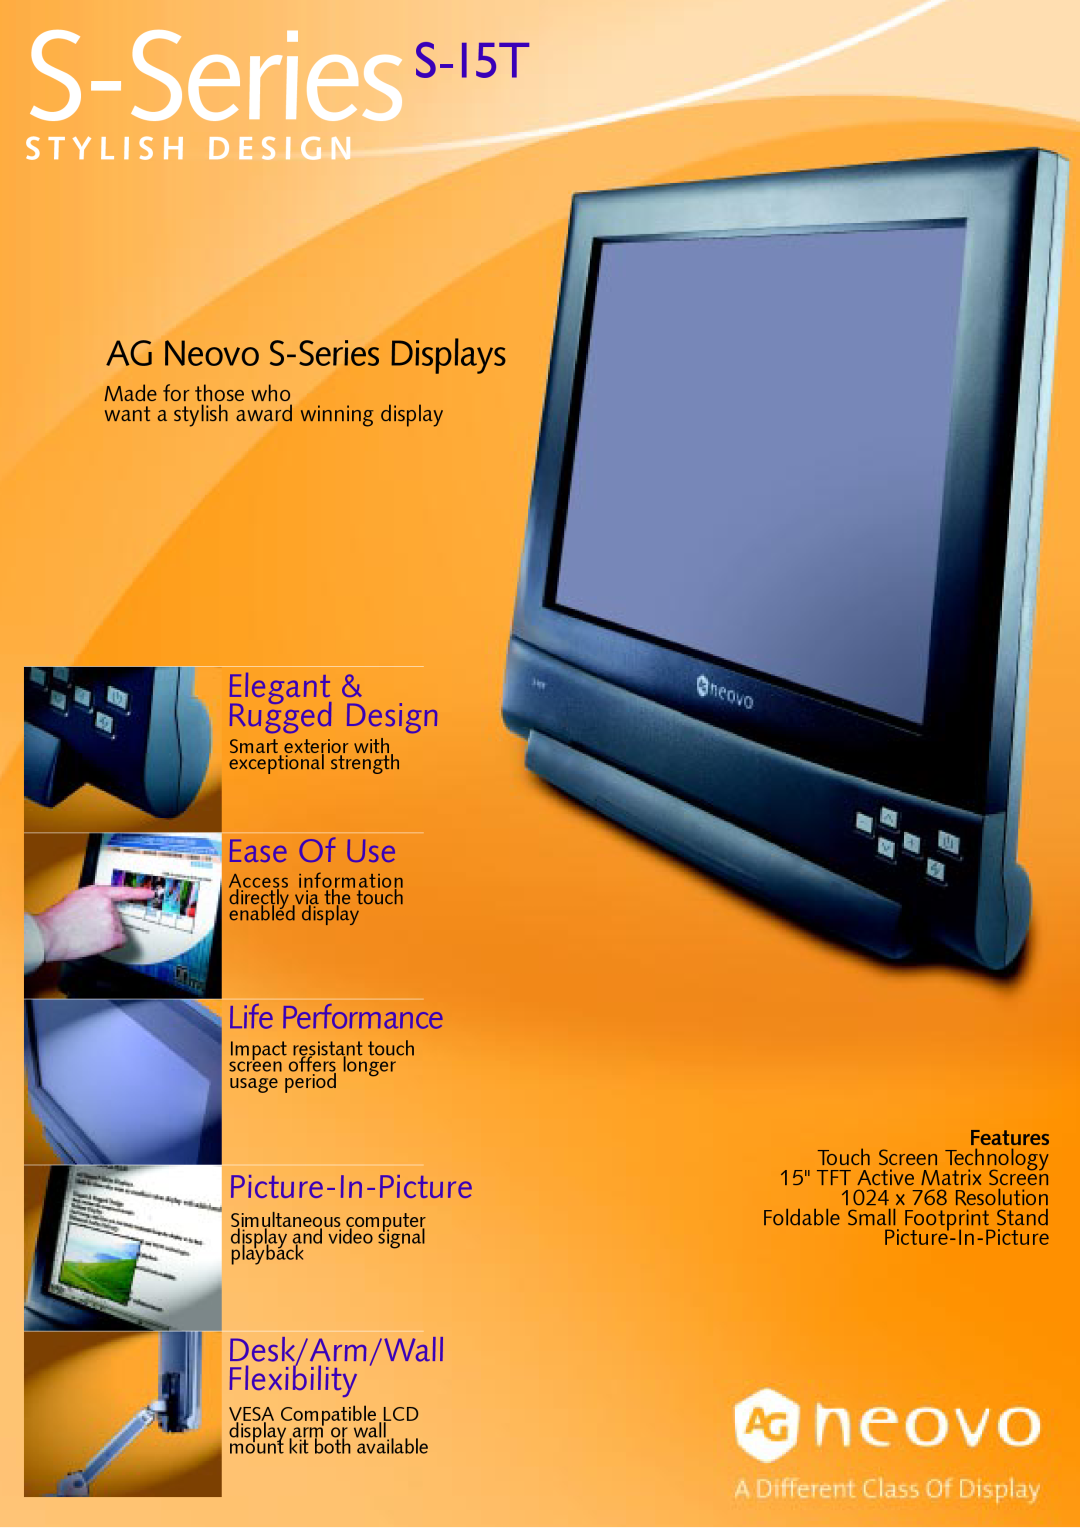 AG Neovo manual S-SeriesS-15T, AG Neovo S-Series Displays, S T Y L I S H D E S I G N, Elegant Rugged Design 